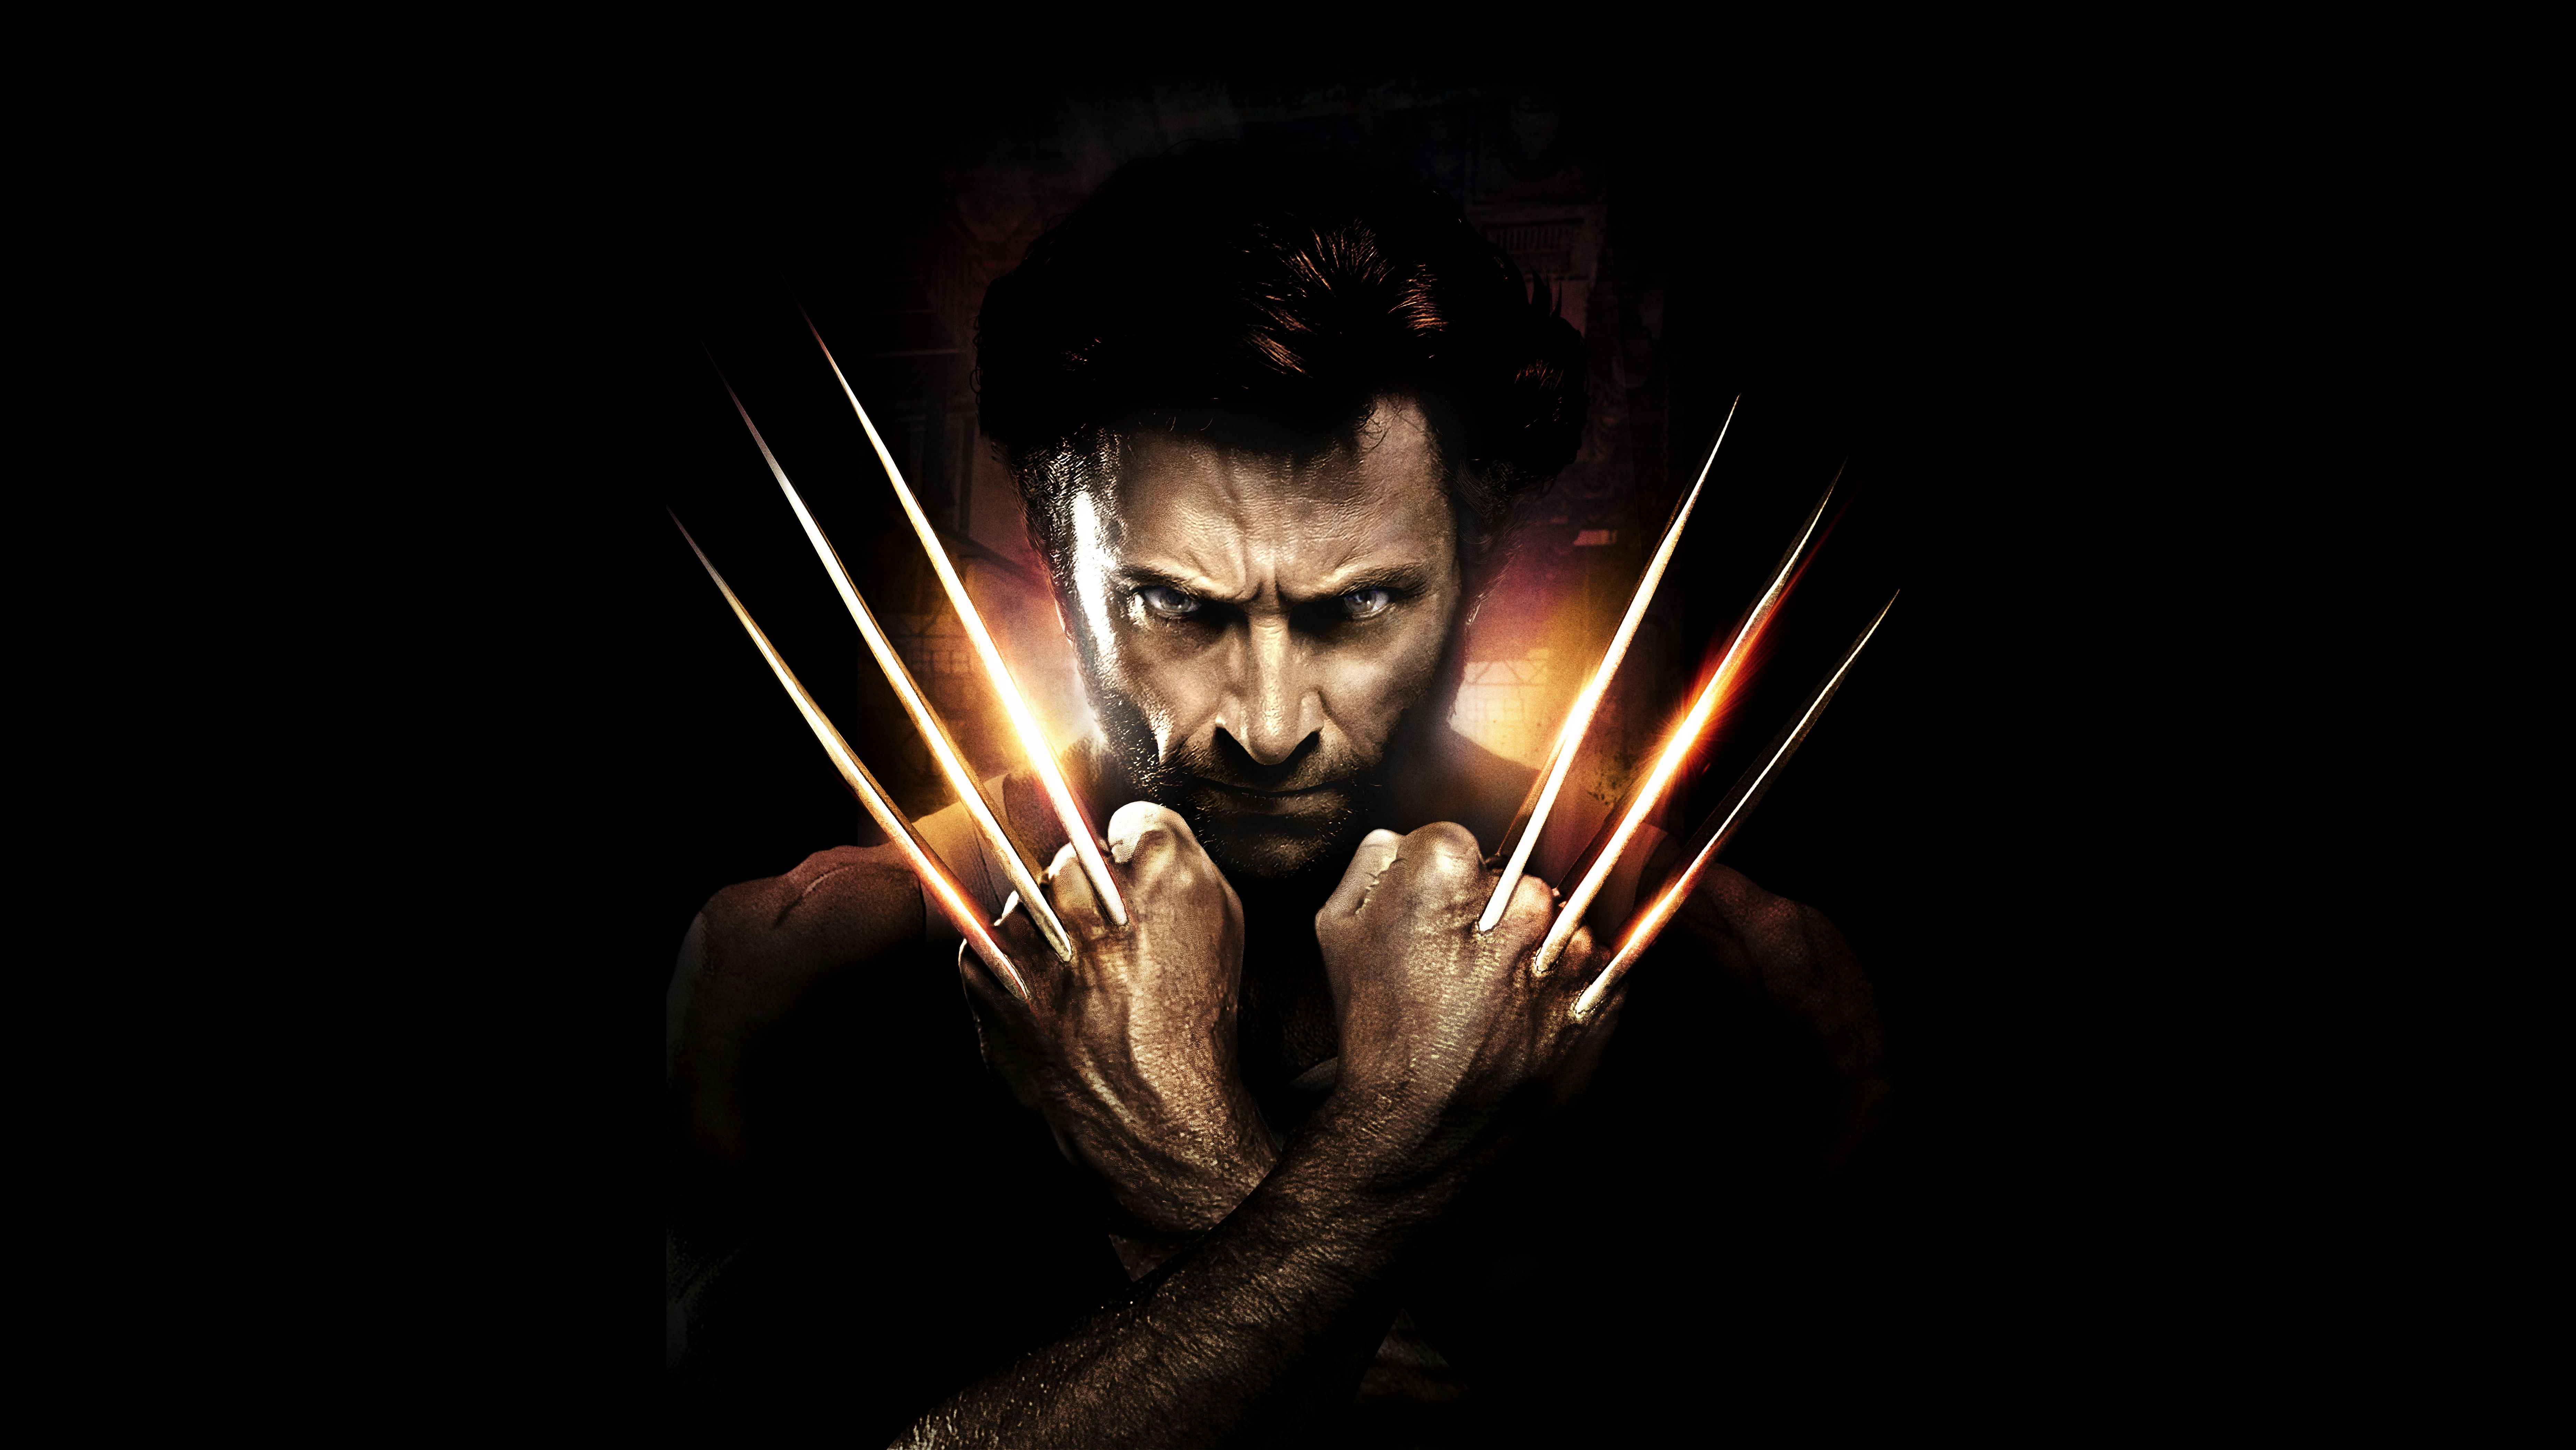 image Celebrities Hugh Jackman Man Logan (film) Wolverine 7460x4200